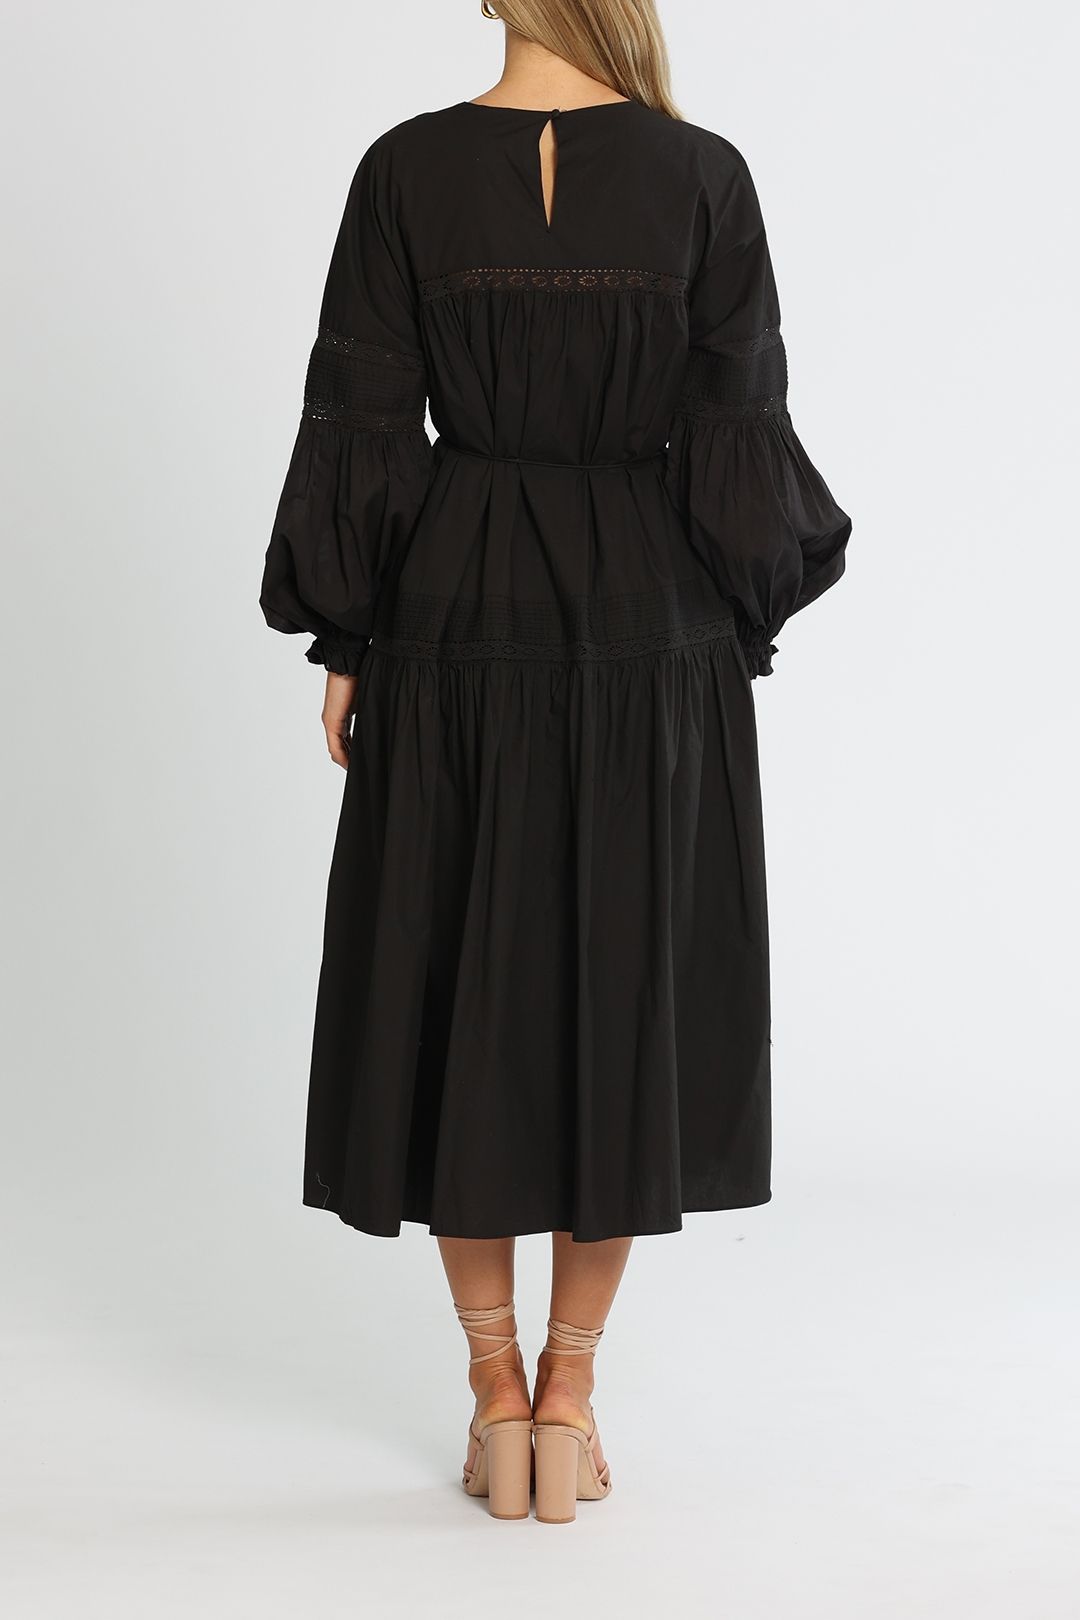 Joslin Marlo Organic Cotton Midi Smock Dress Black Lace